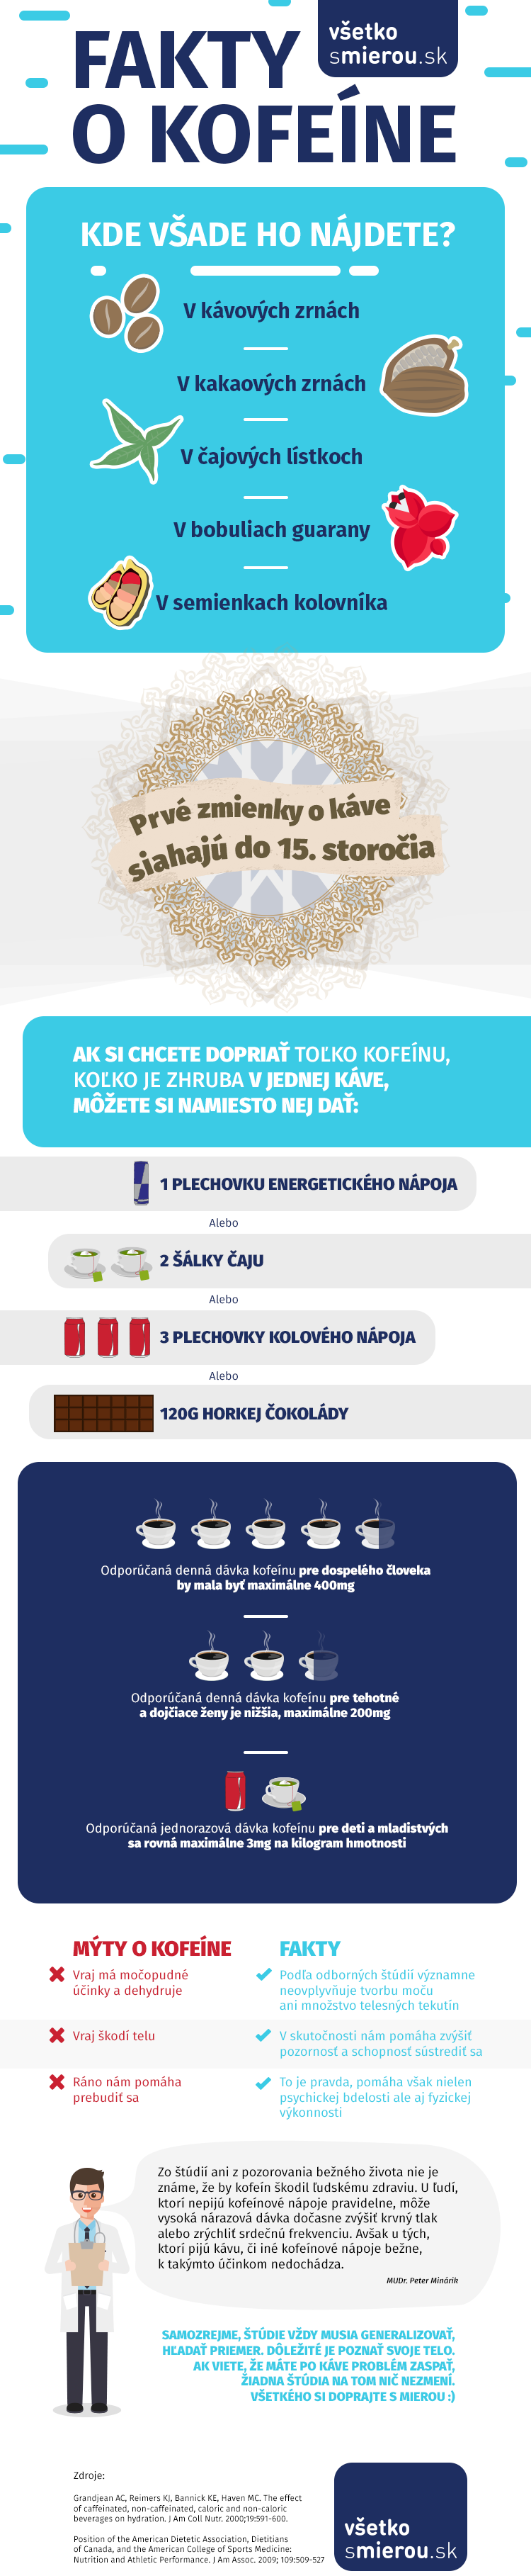 infografika o kofeine